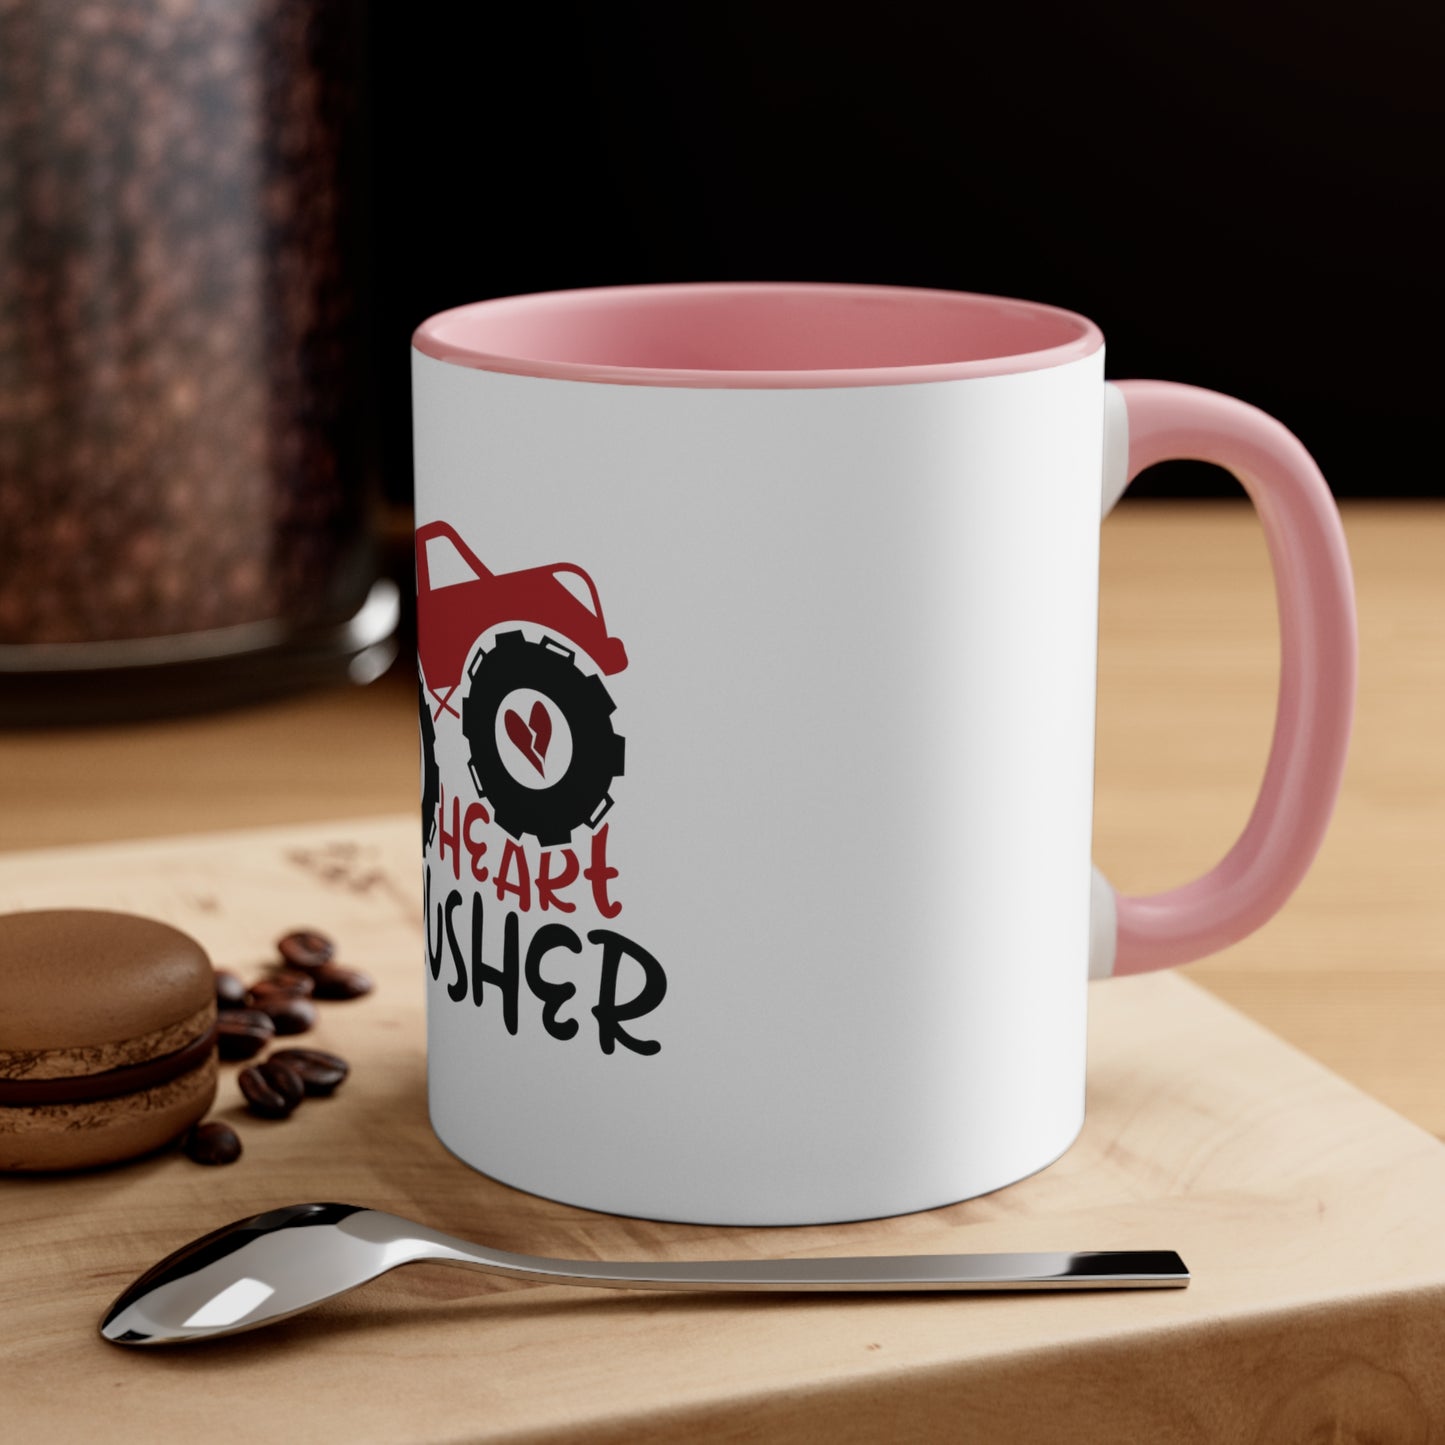 Heart Crusher Mug